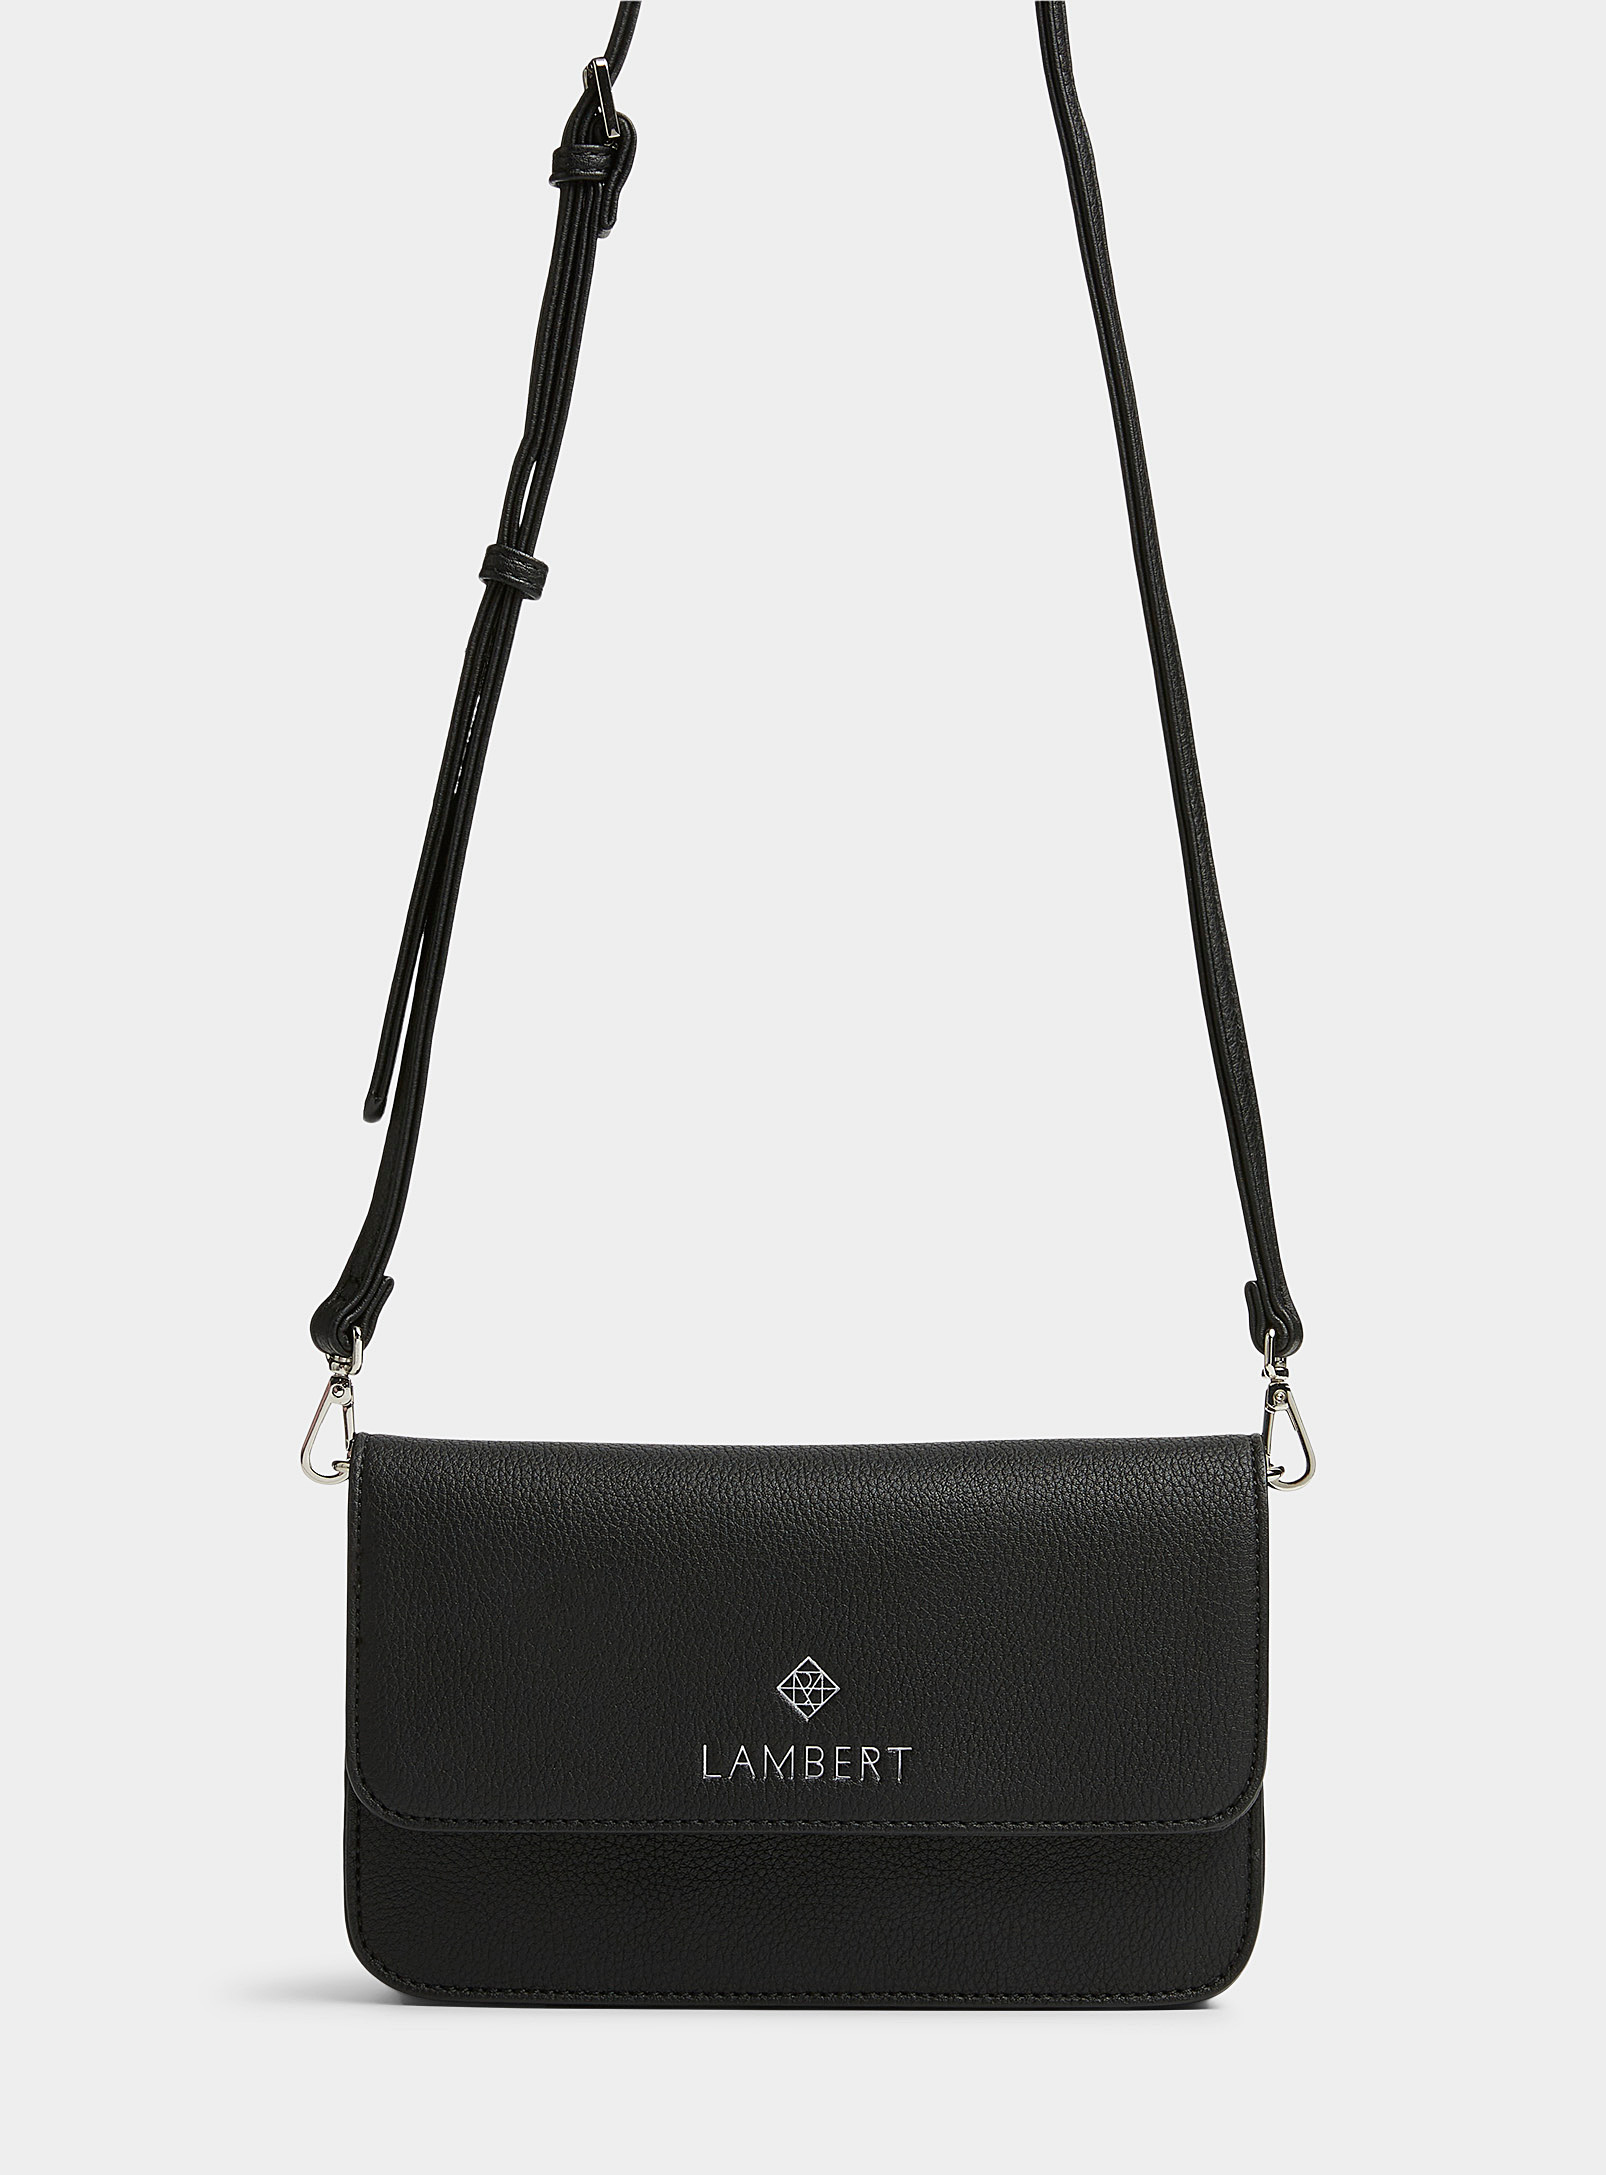 Lambert Gabrielle 4-in-1 Flap Bag In Black